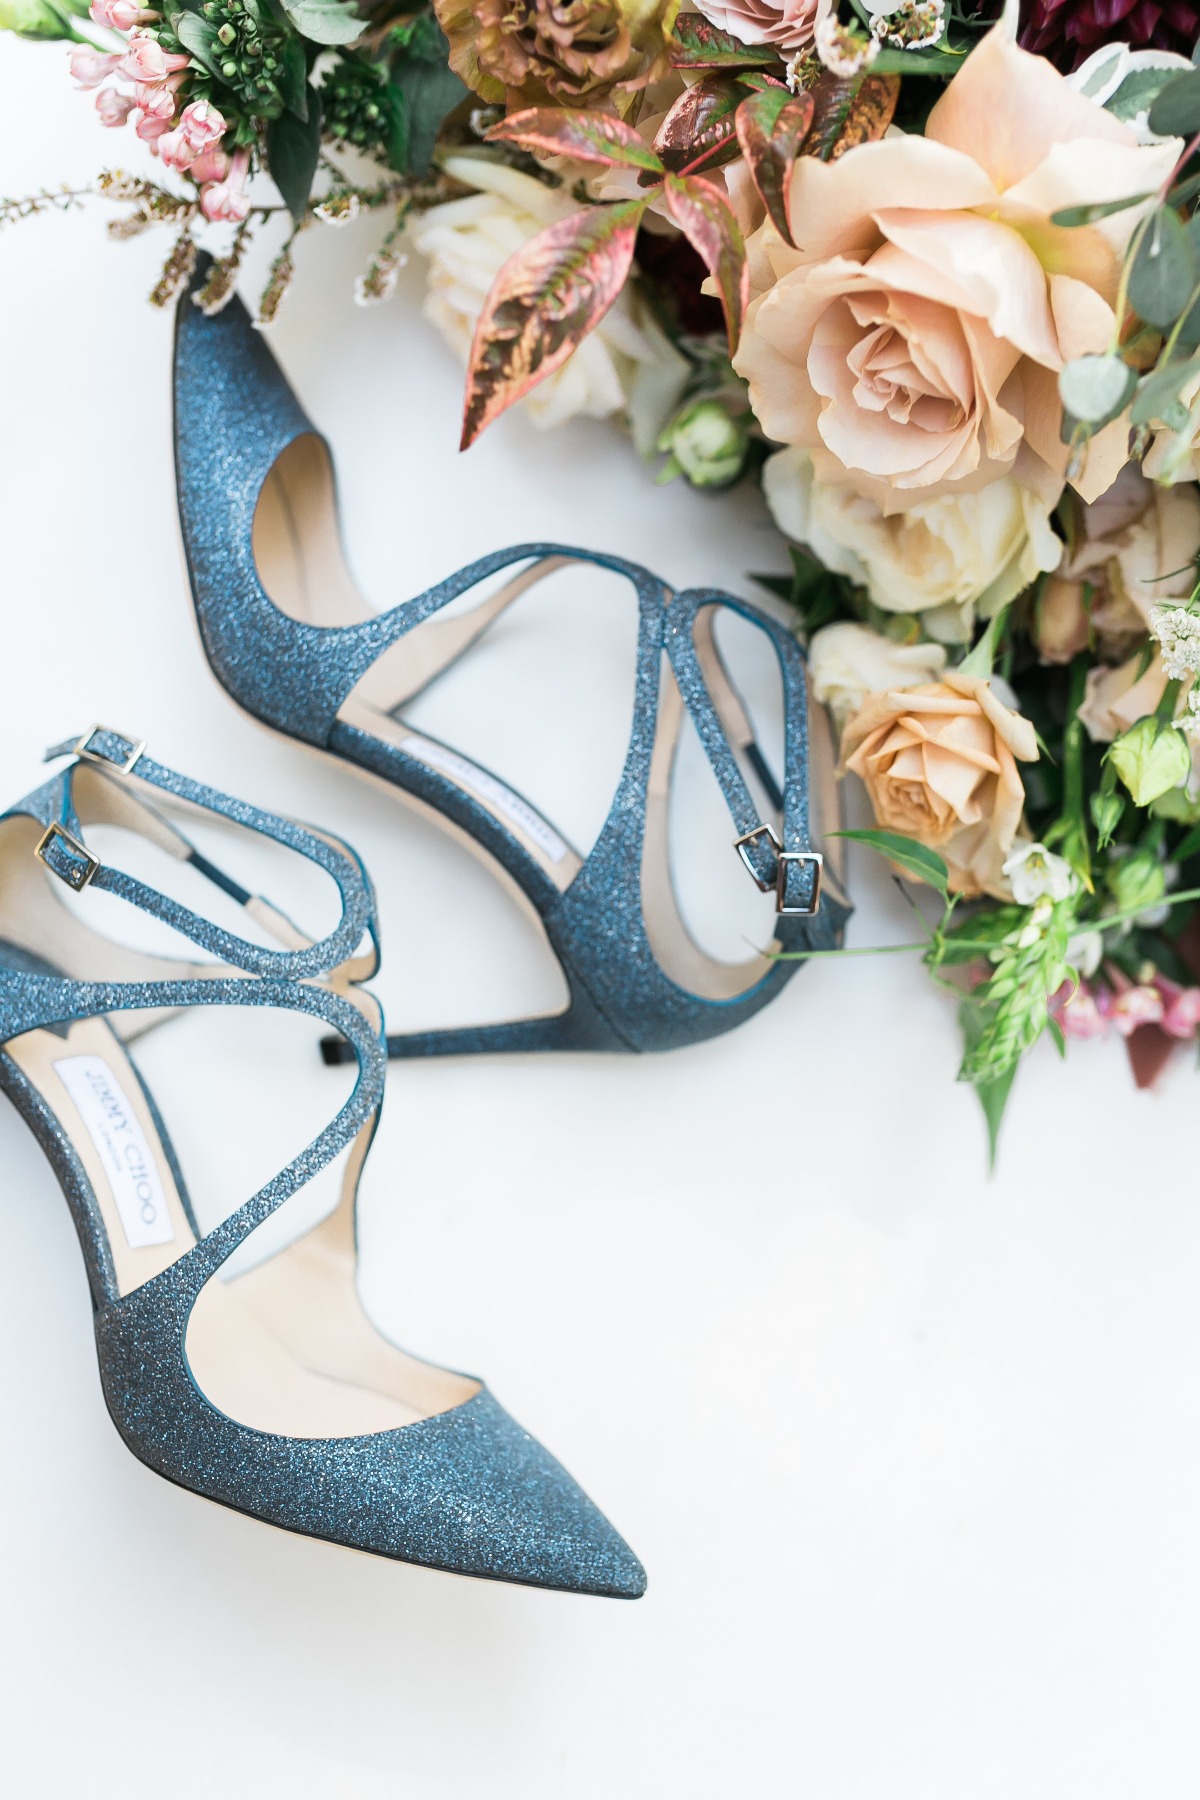 glittery blue wedding shoes